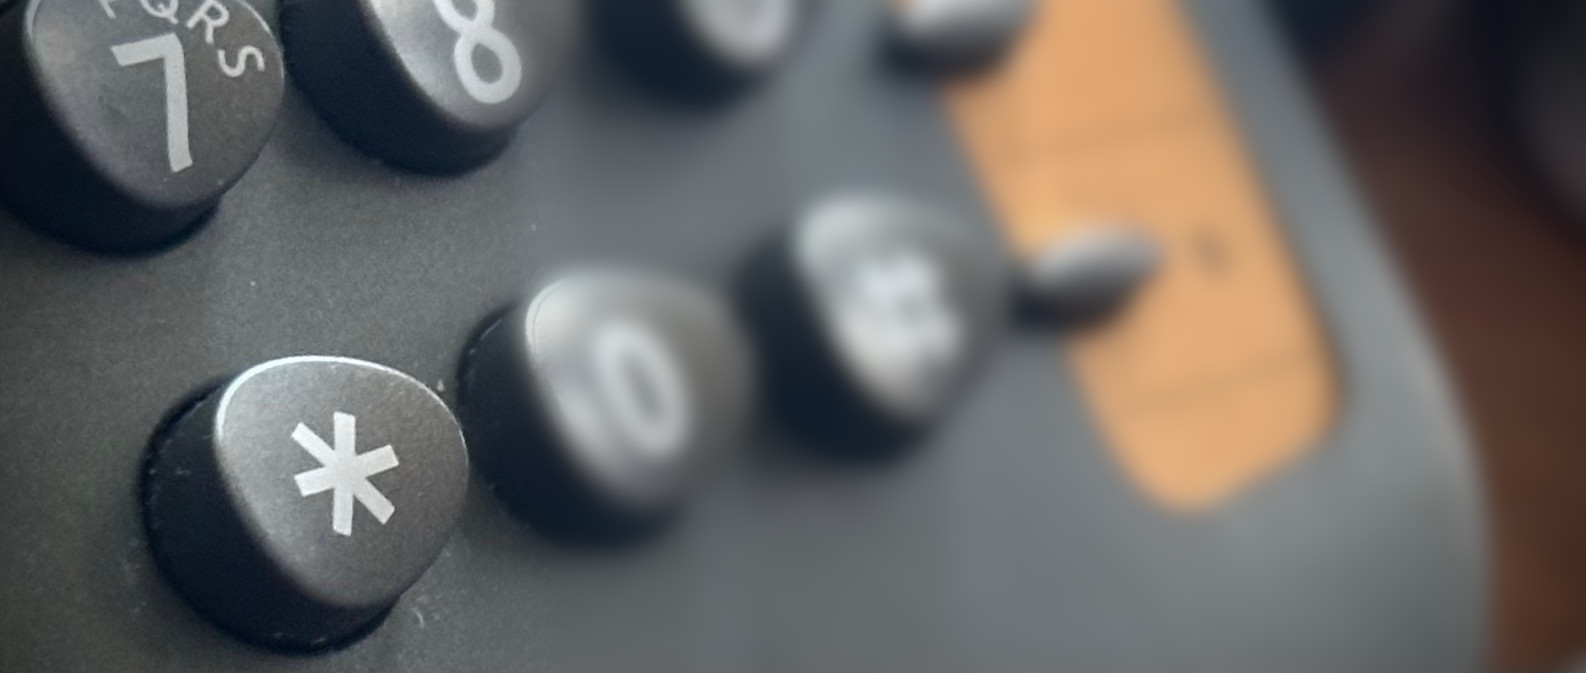 Closeup of a telephone keypad, highlighting the asterisk key